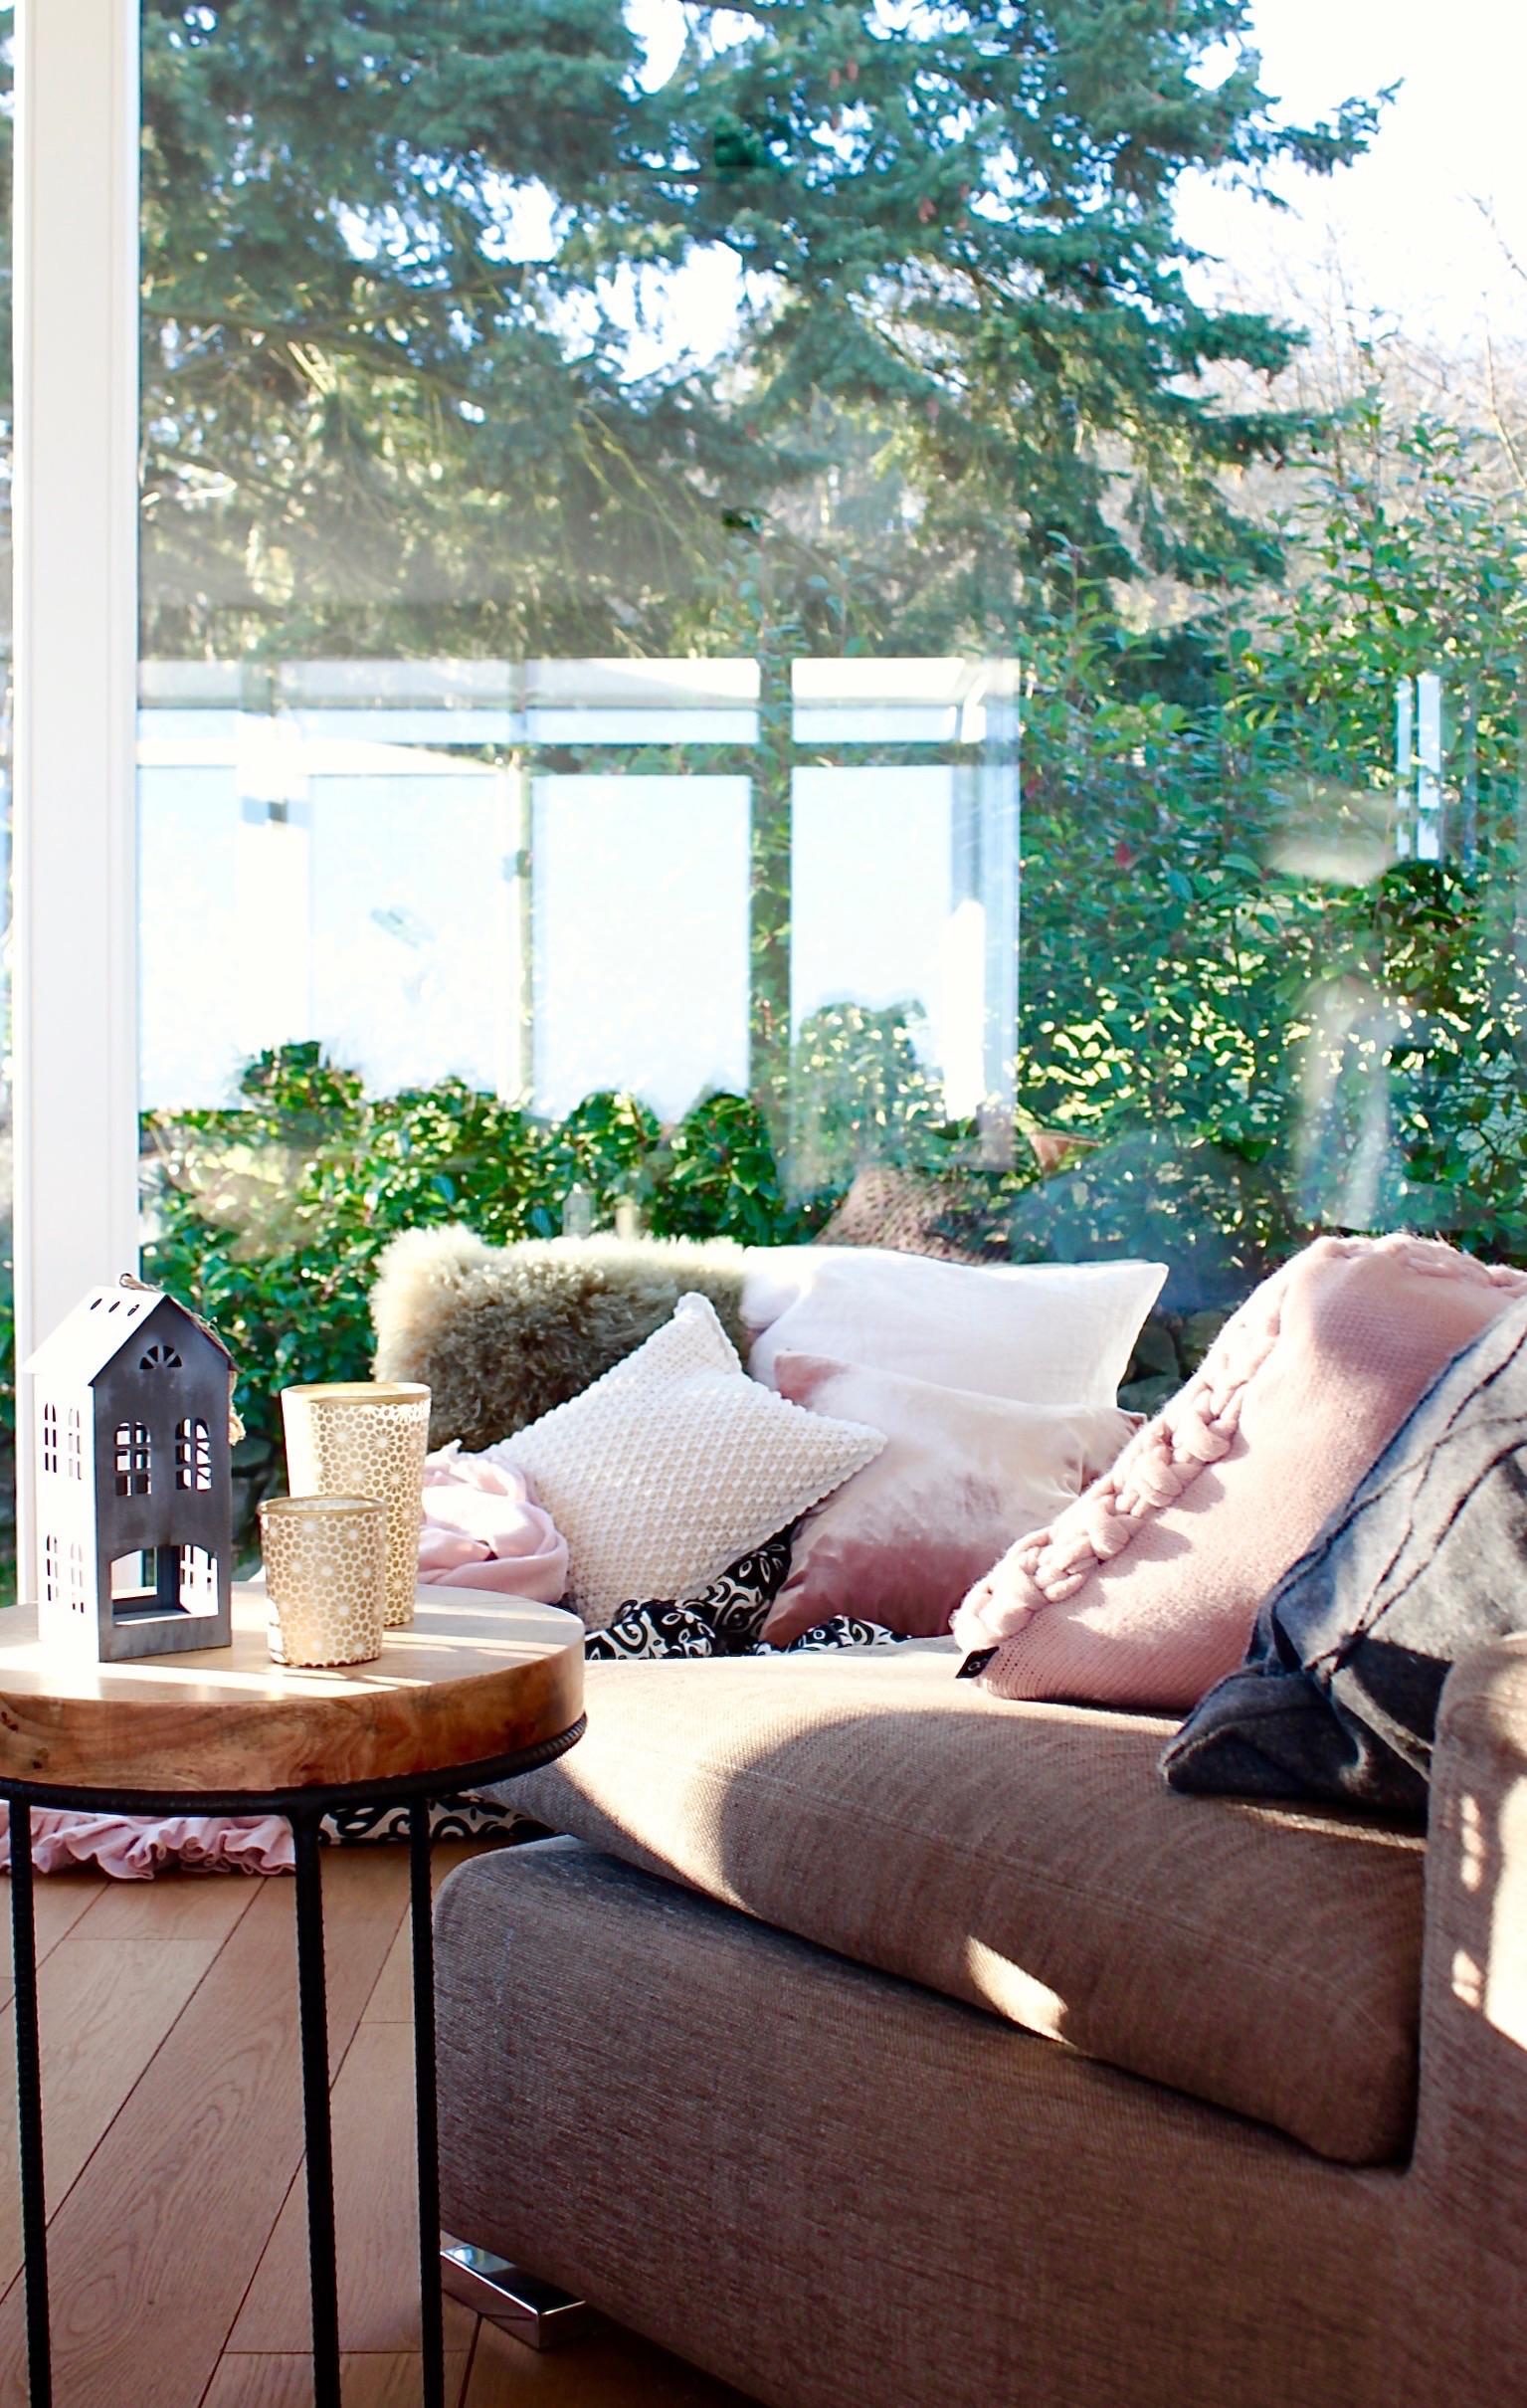 #cozy #interior #couchliebt #zuhause #living #interiordesigner #raumatmosphäre